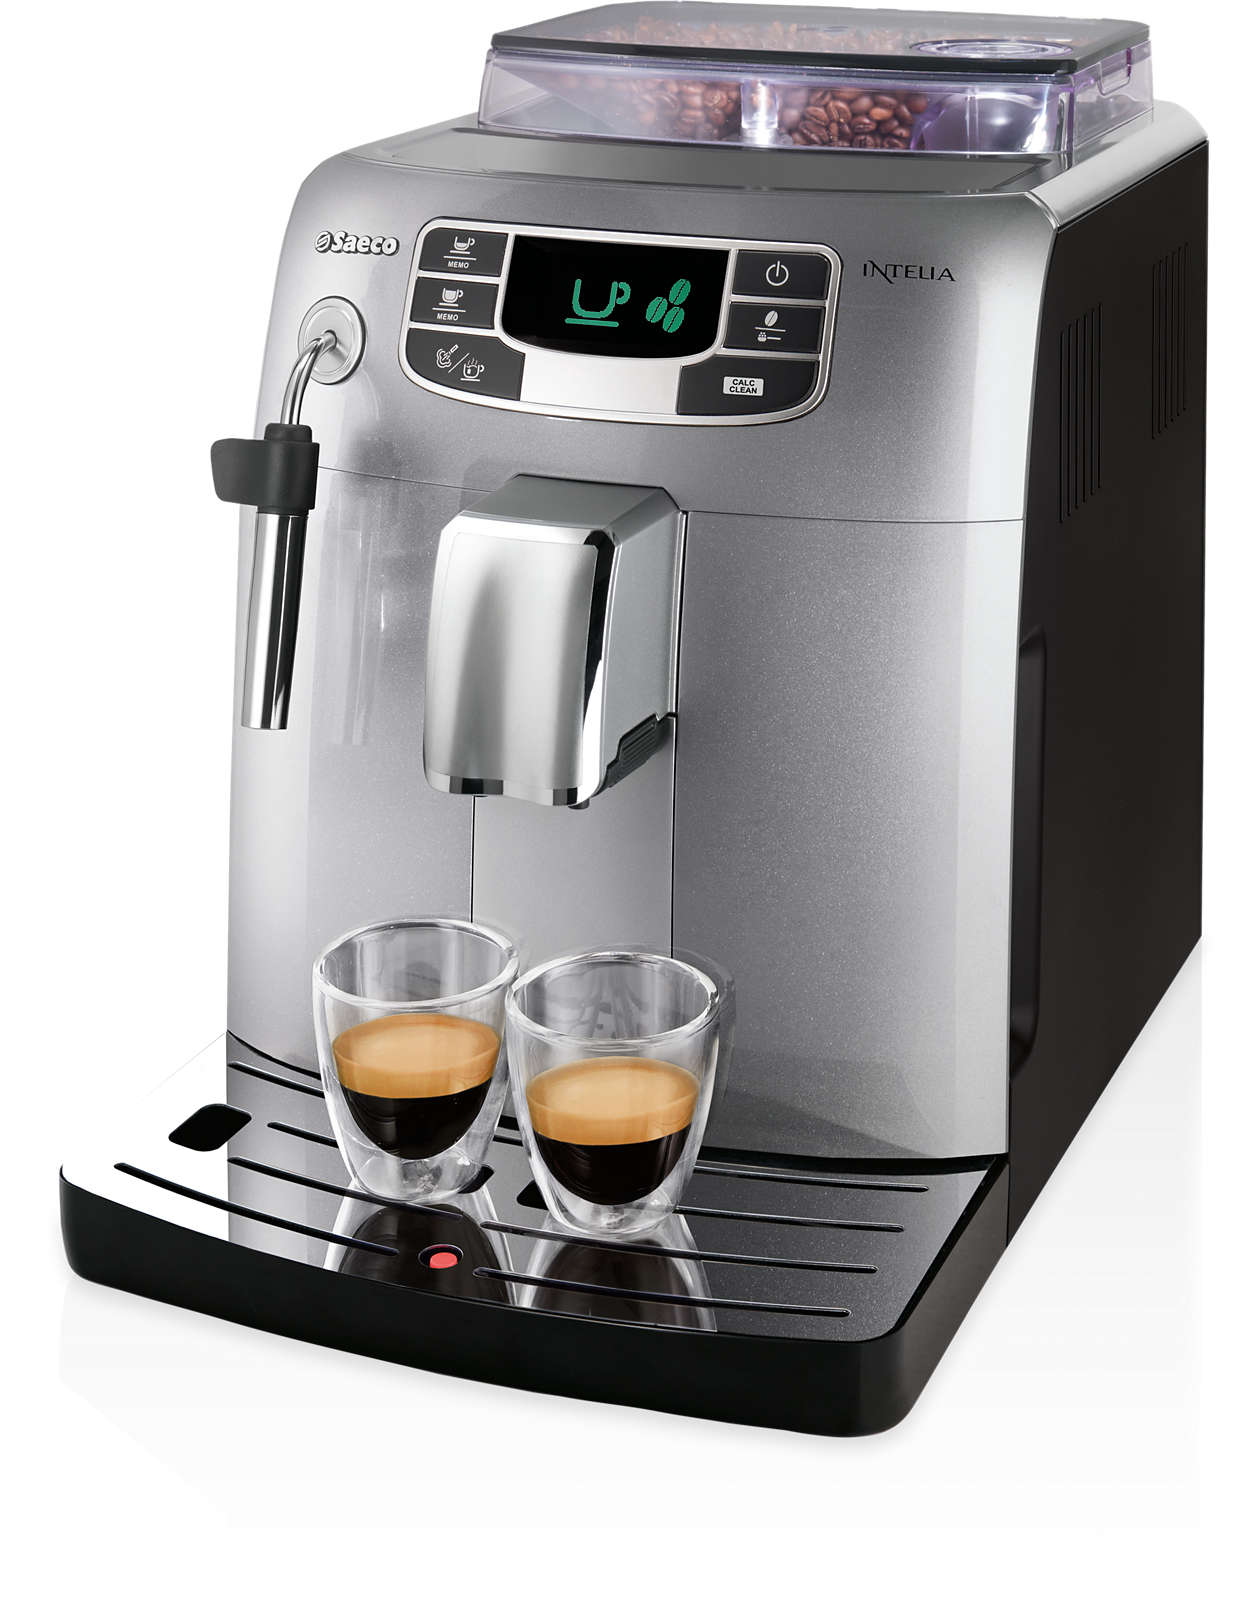 Espresso şi cafea printr-o atingere